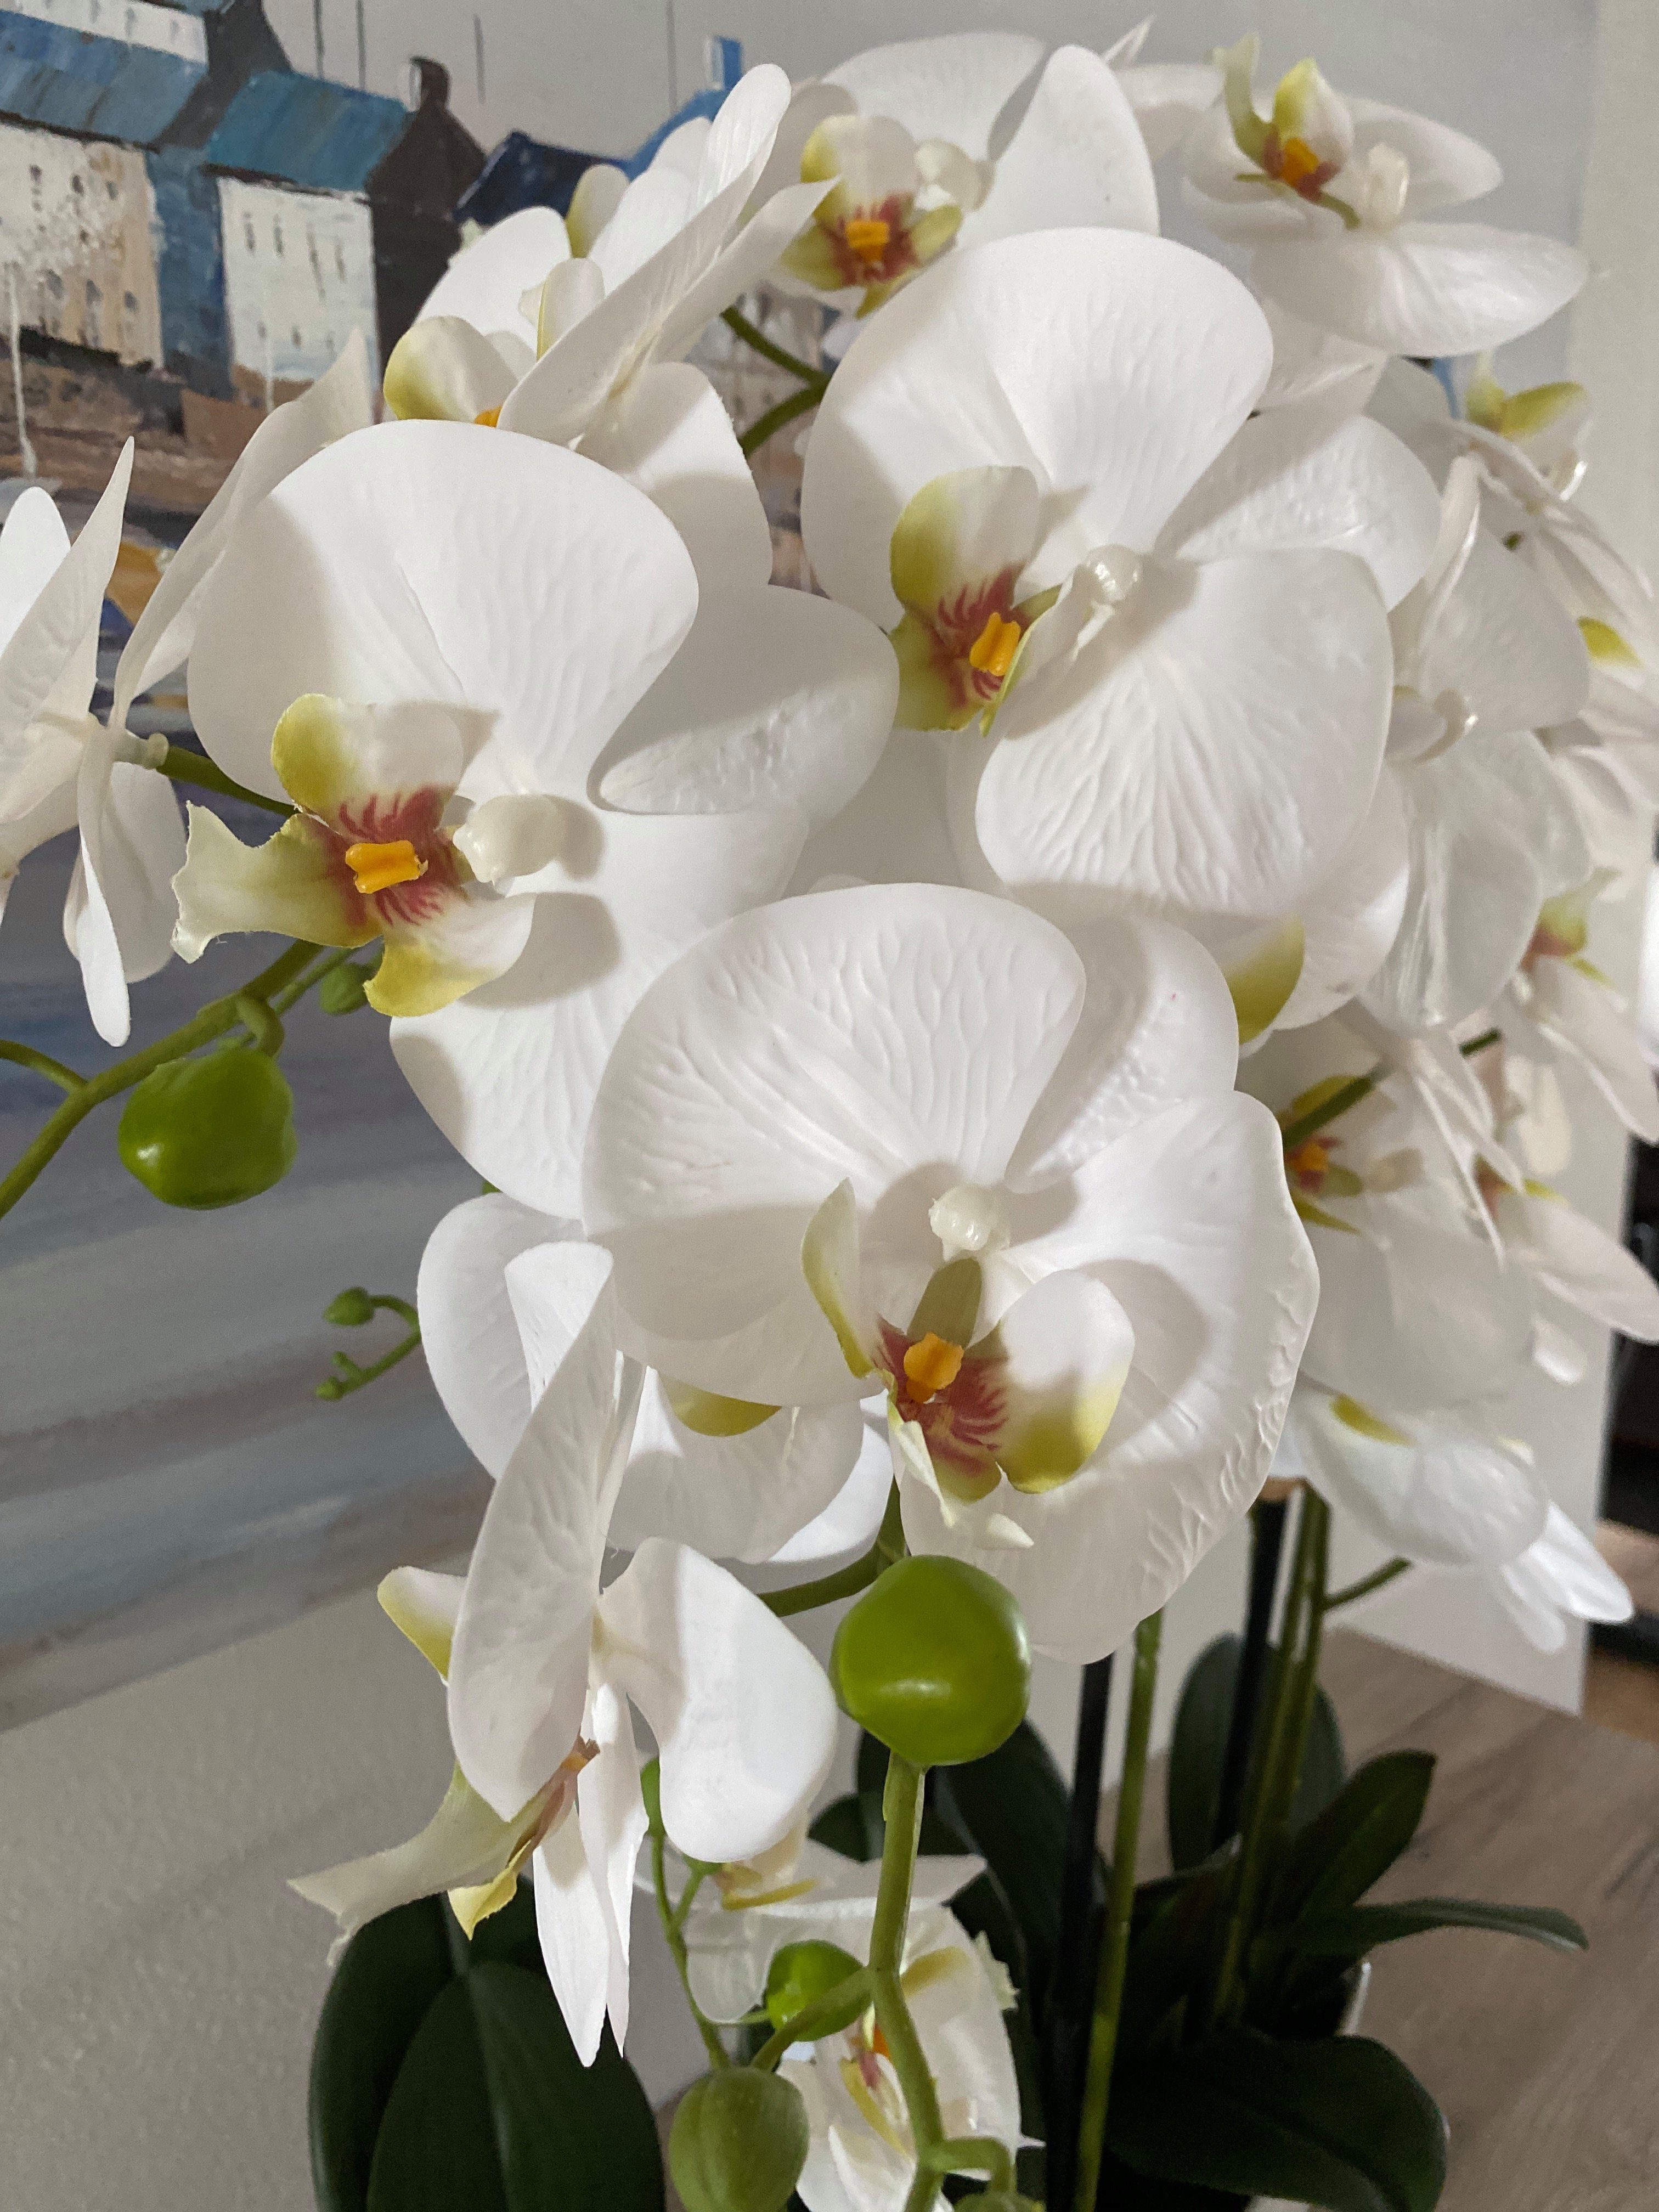 cm, Dahlia Arrangement Orchidee Keramiktopf, 70 weißem Kunstblume Studios in